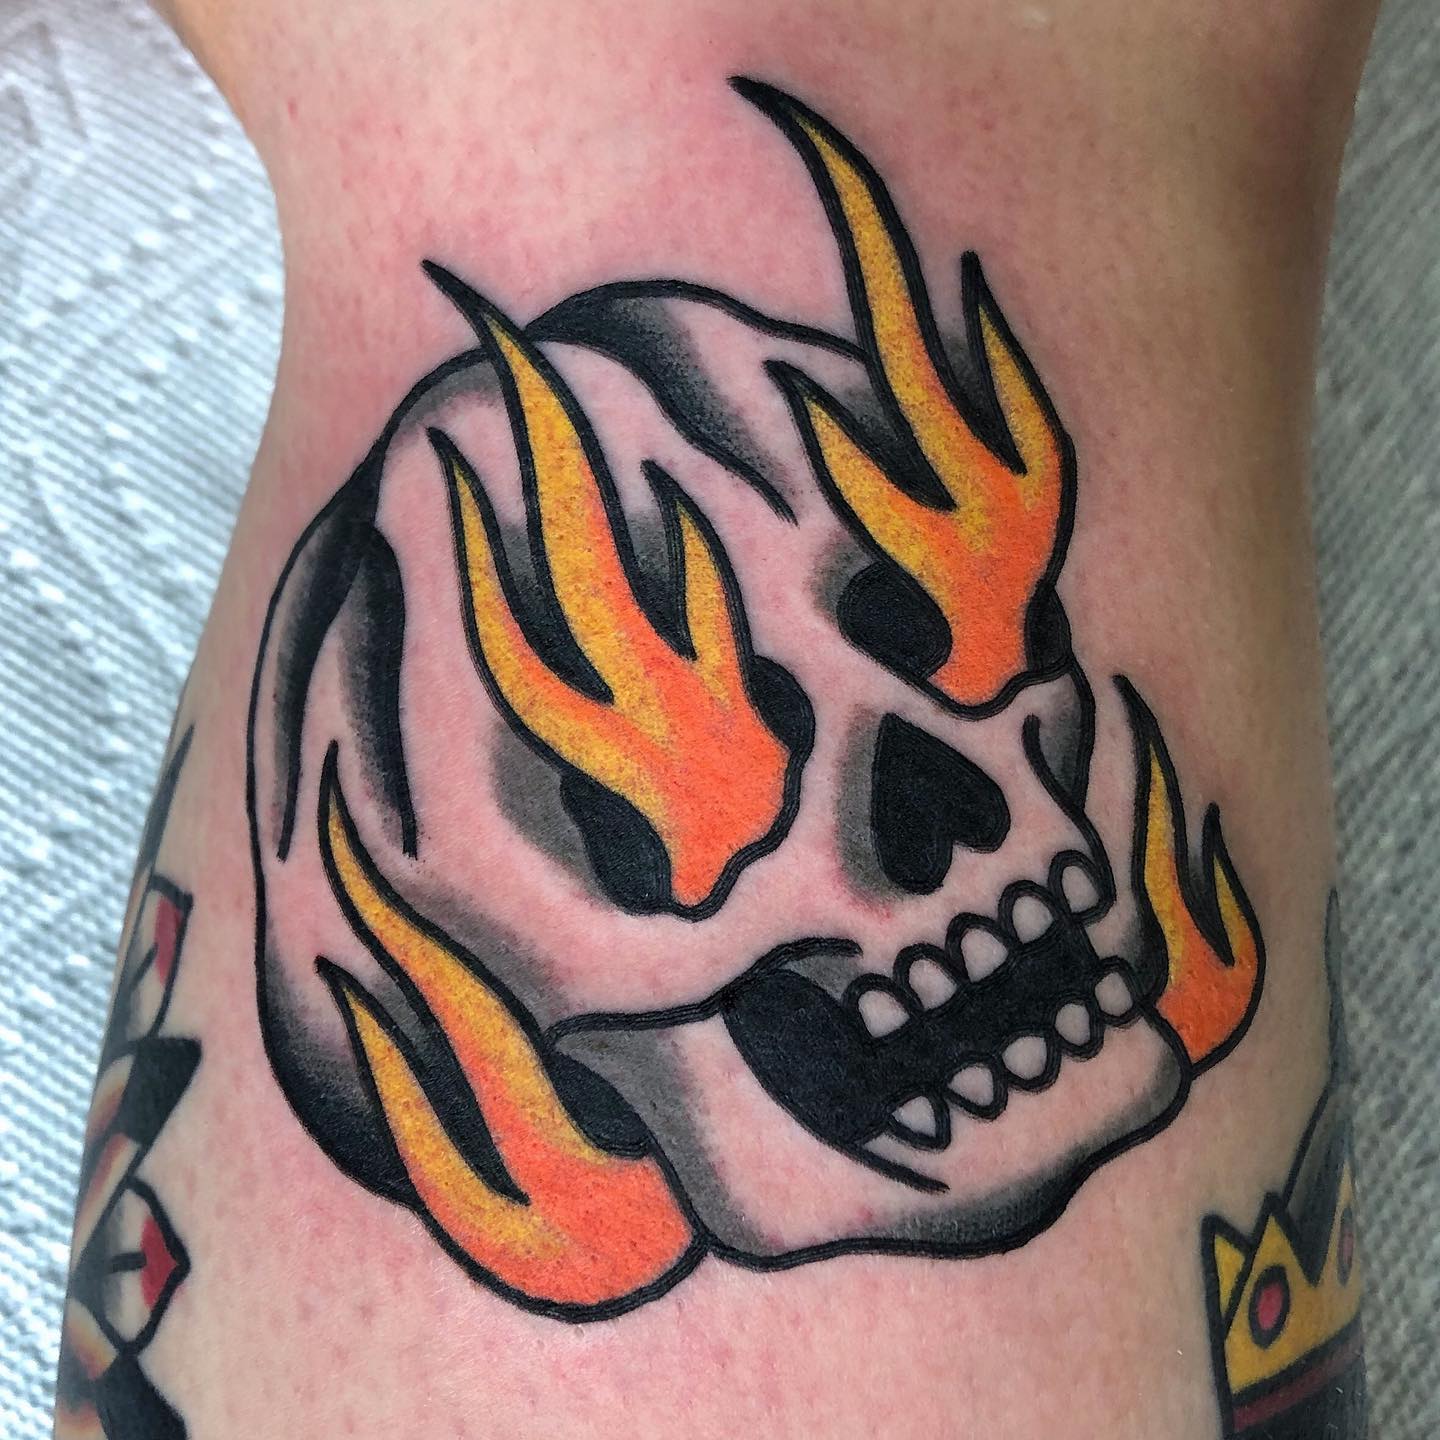 Skull Tattoo by skull and snake